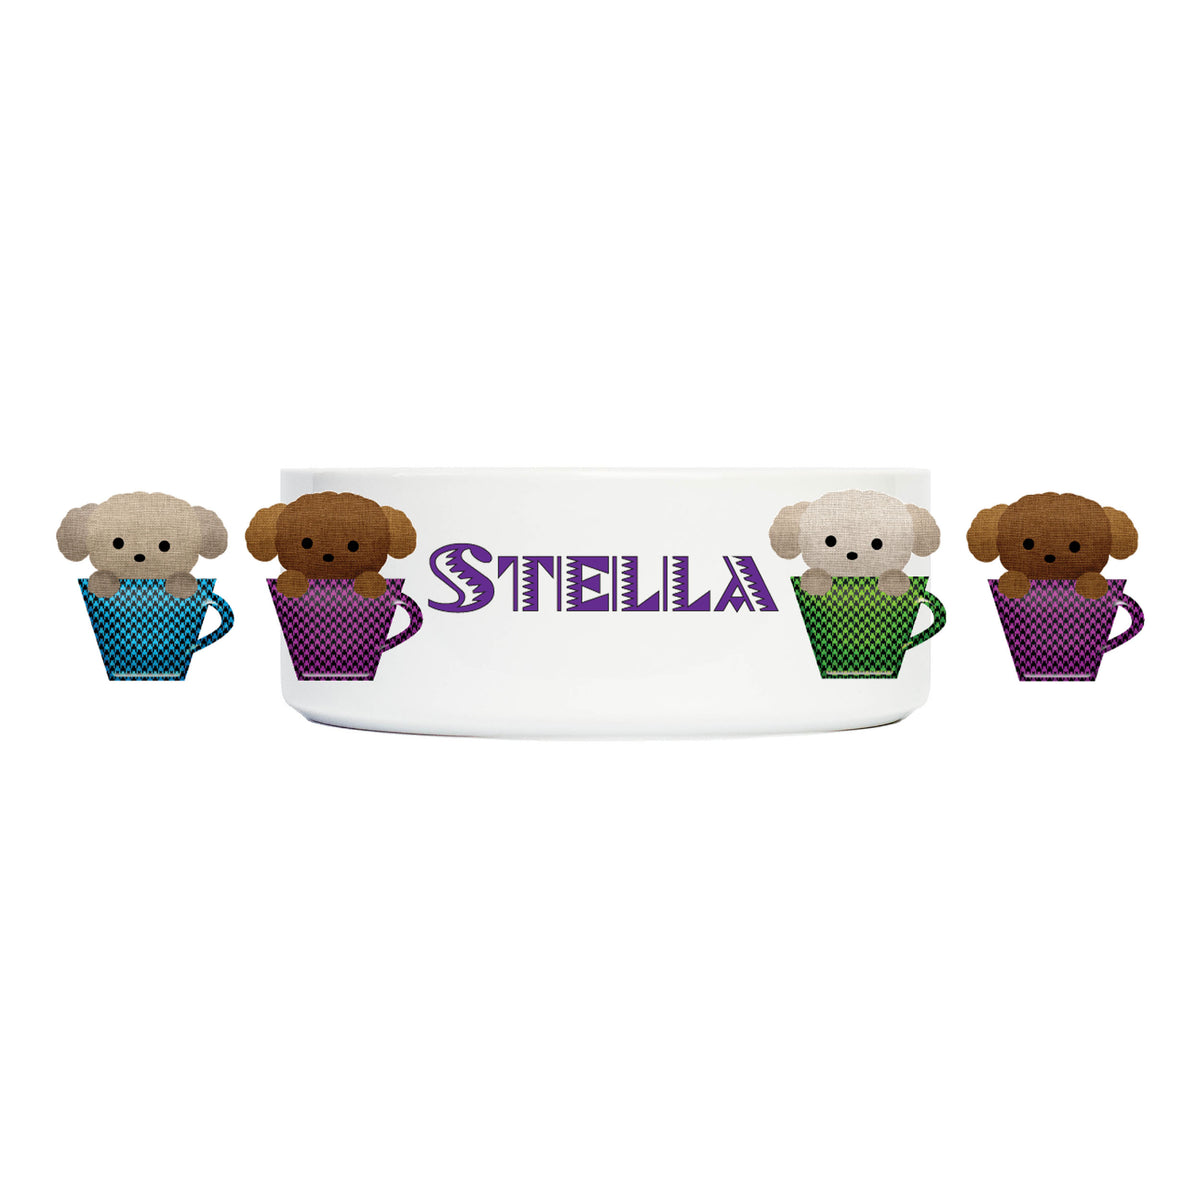 Personalised bowl for dogs / ceramic - 22oz 650ml (design 5)